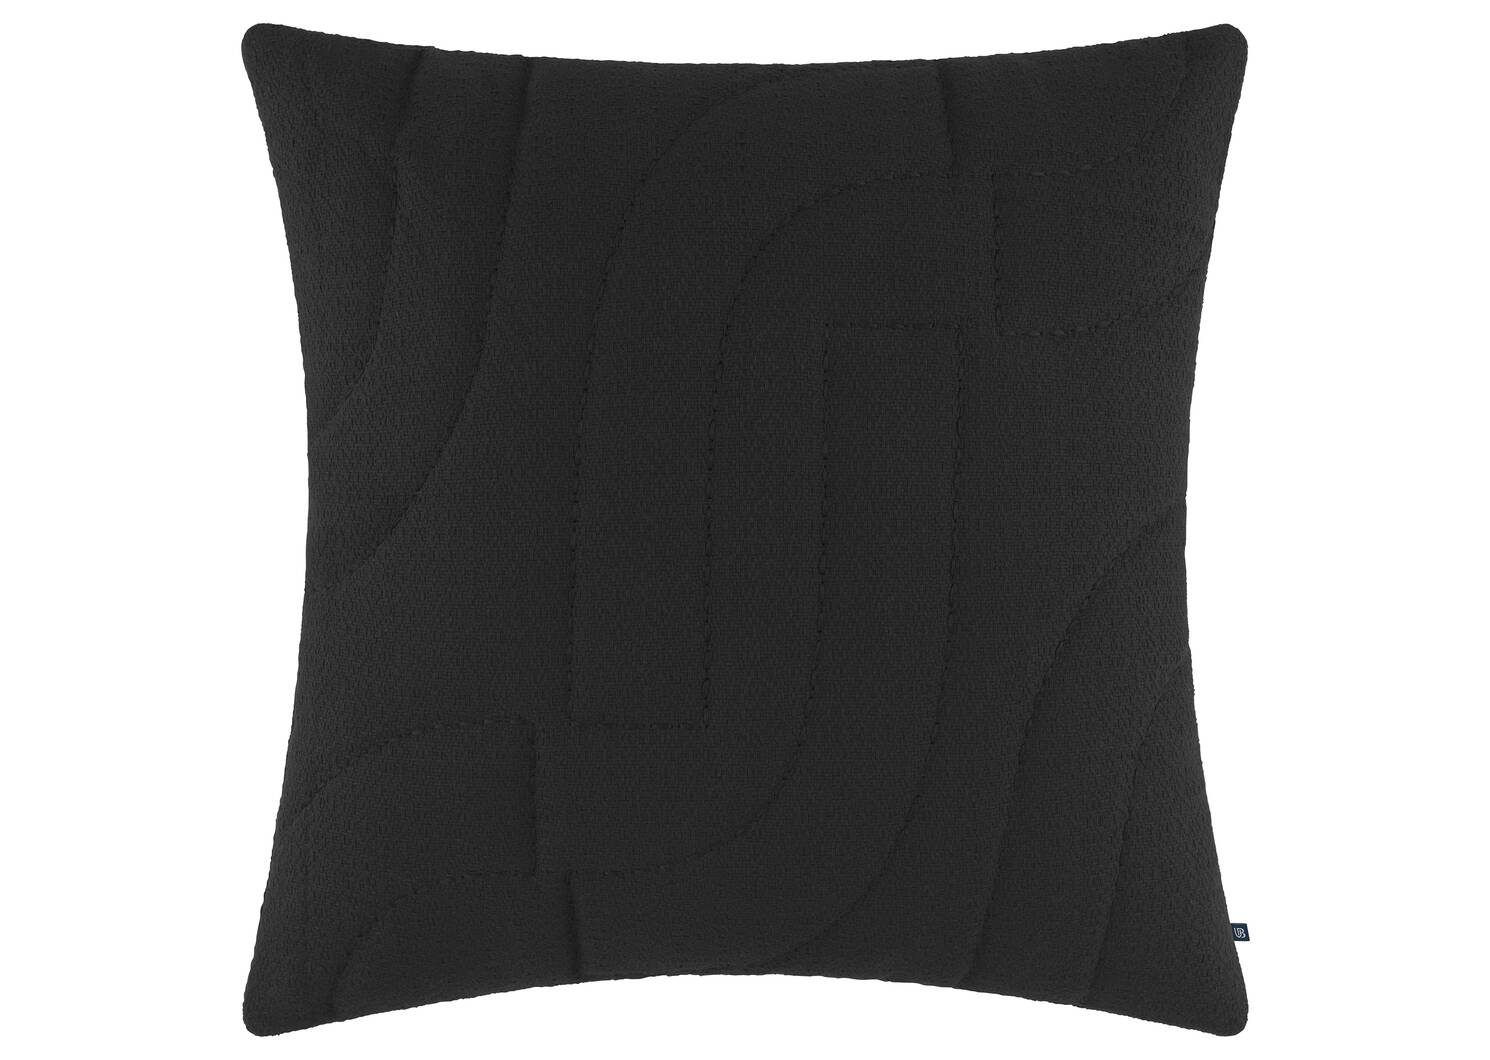 Karine Cotton Pillow 20x20 Black